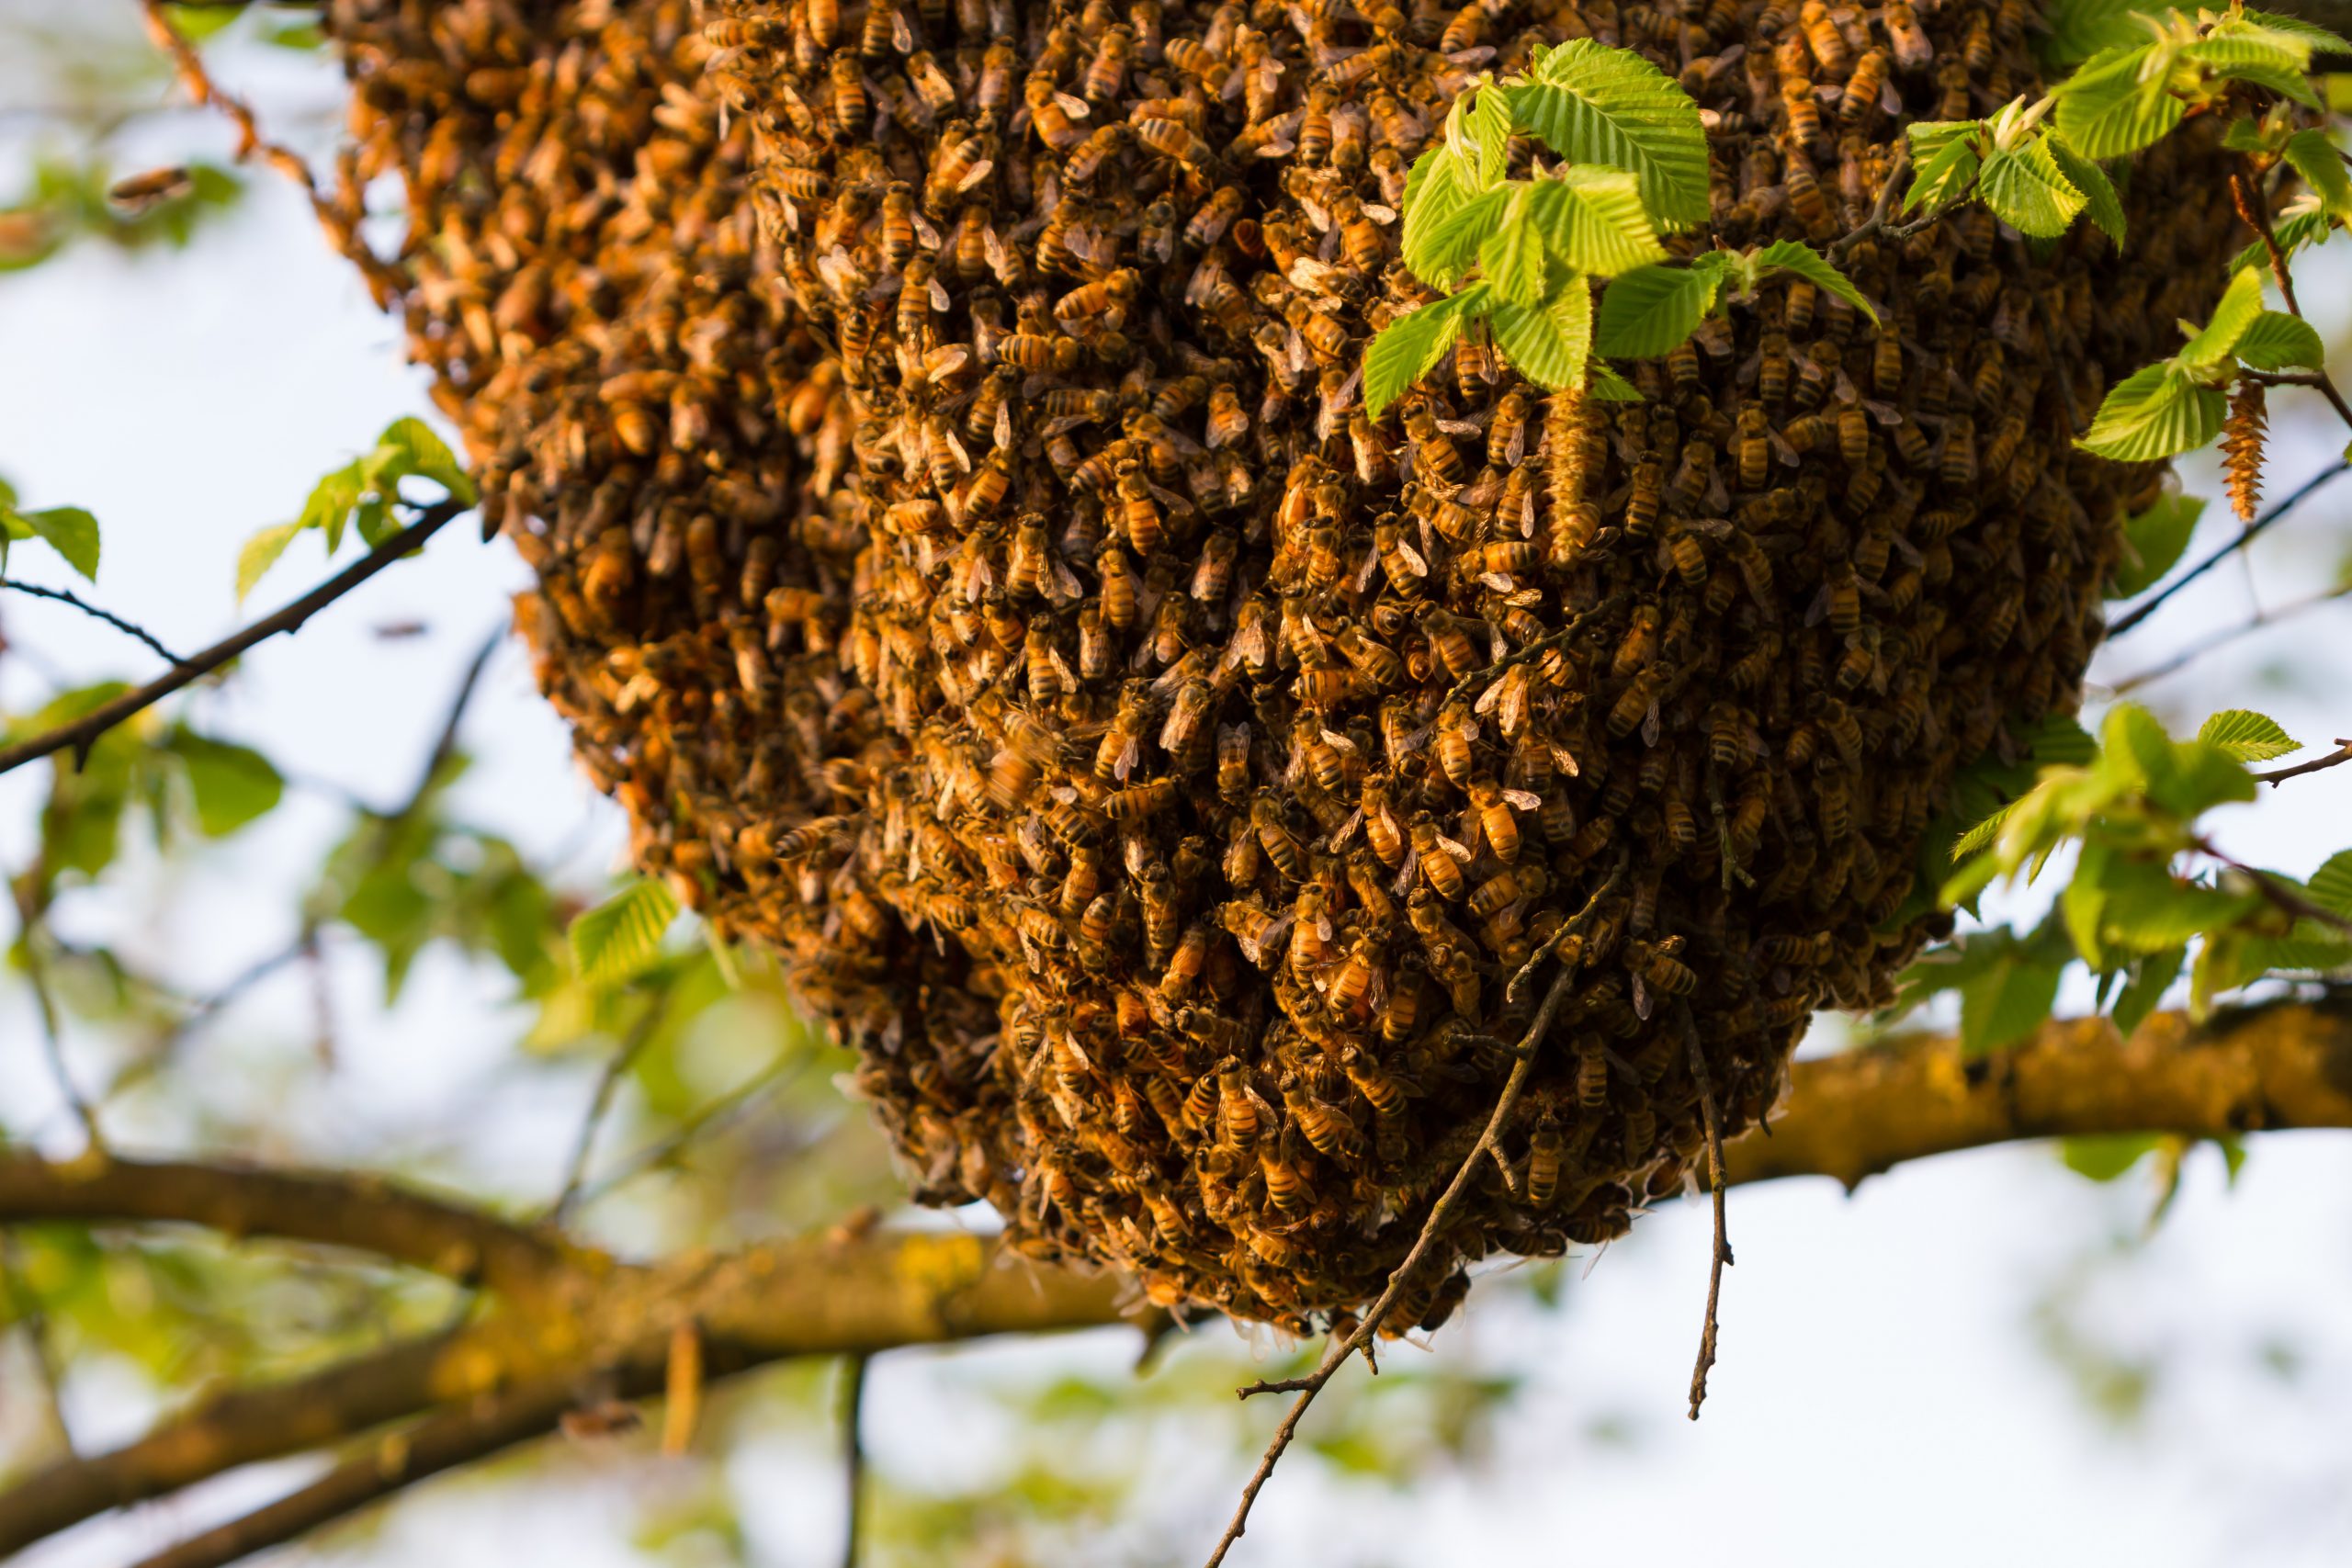 Veteran Beekeeper Dispels “Killer Honeybee” Myths